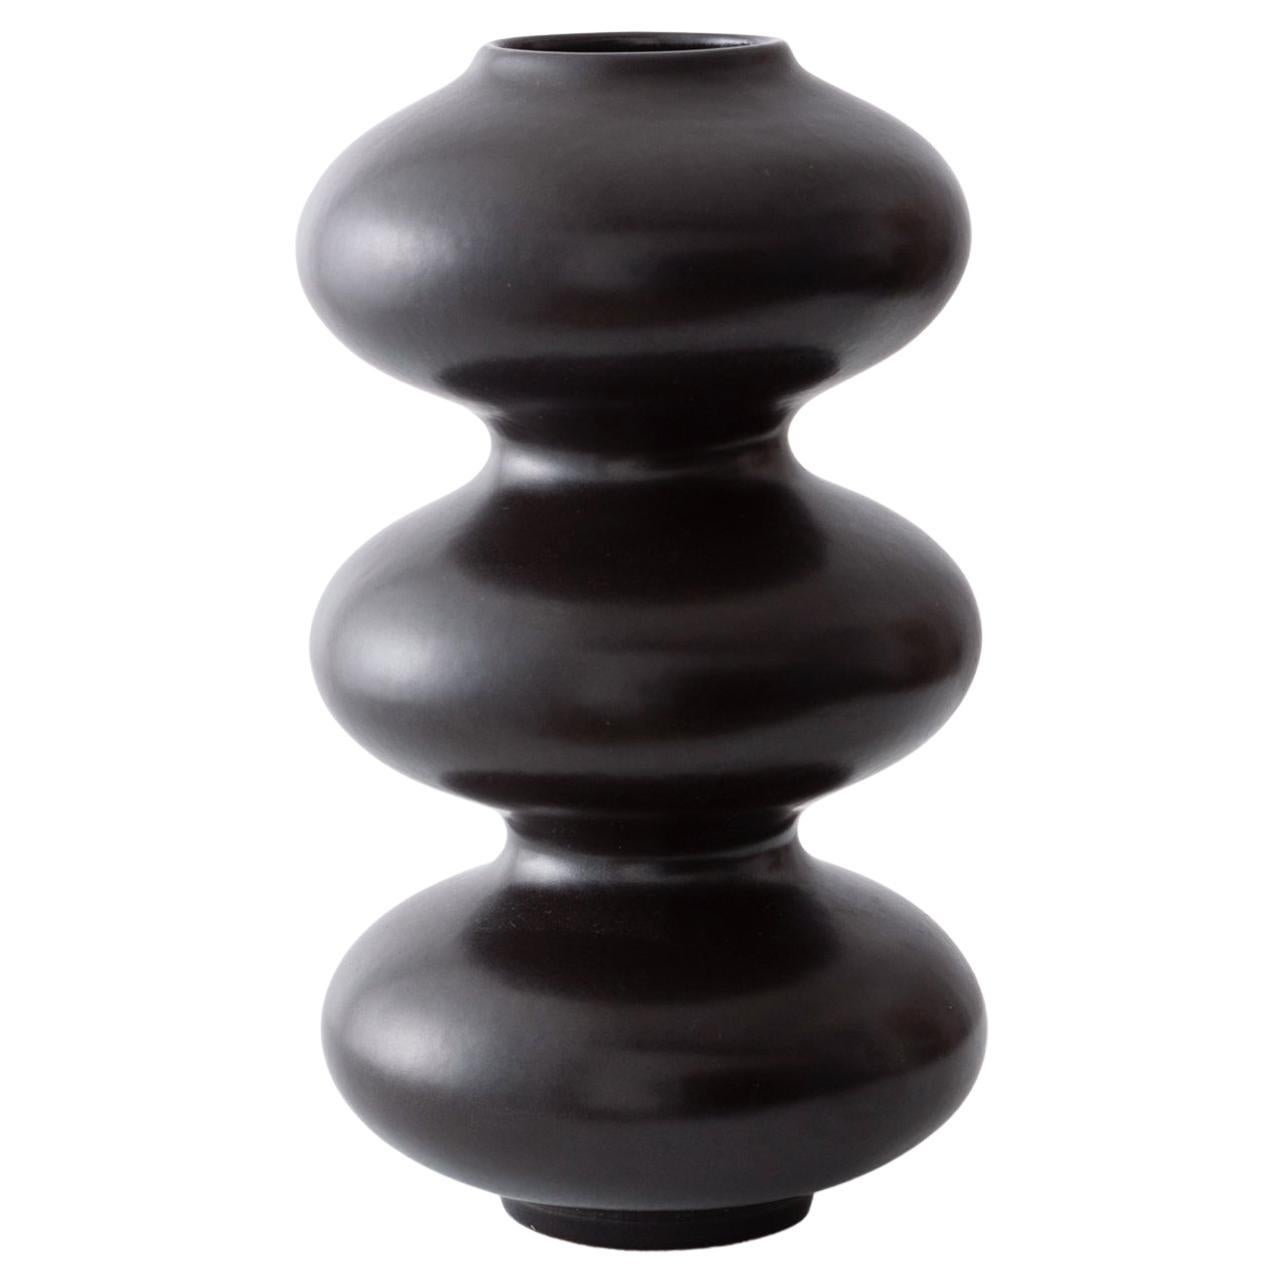 Organic Modern Ceramic Wave Form Vase in Black Glaze by Forma Rosa Studio For Sale